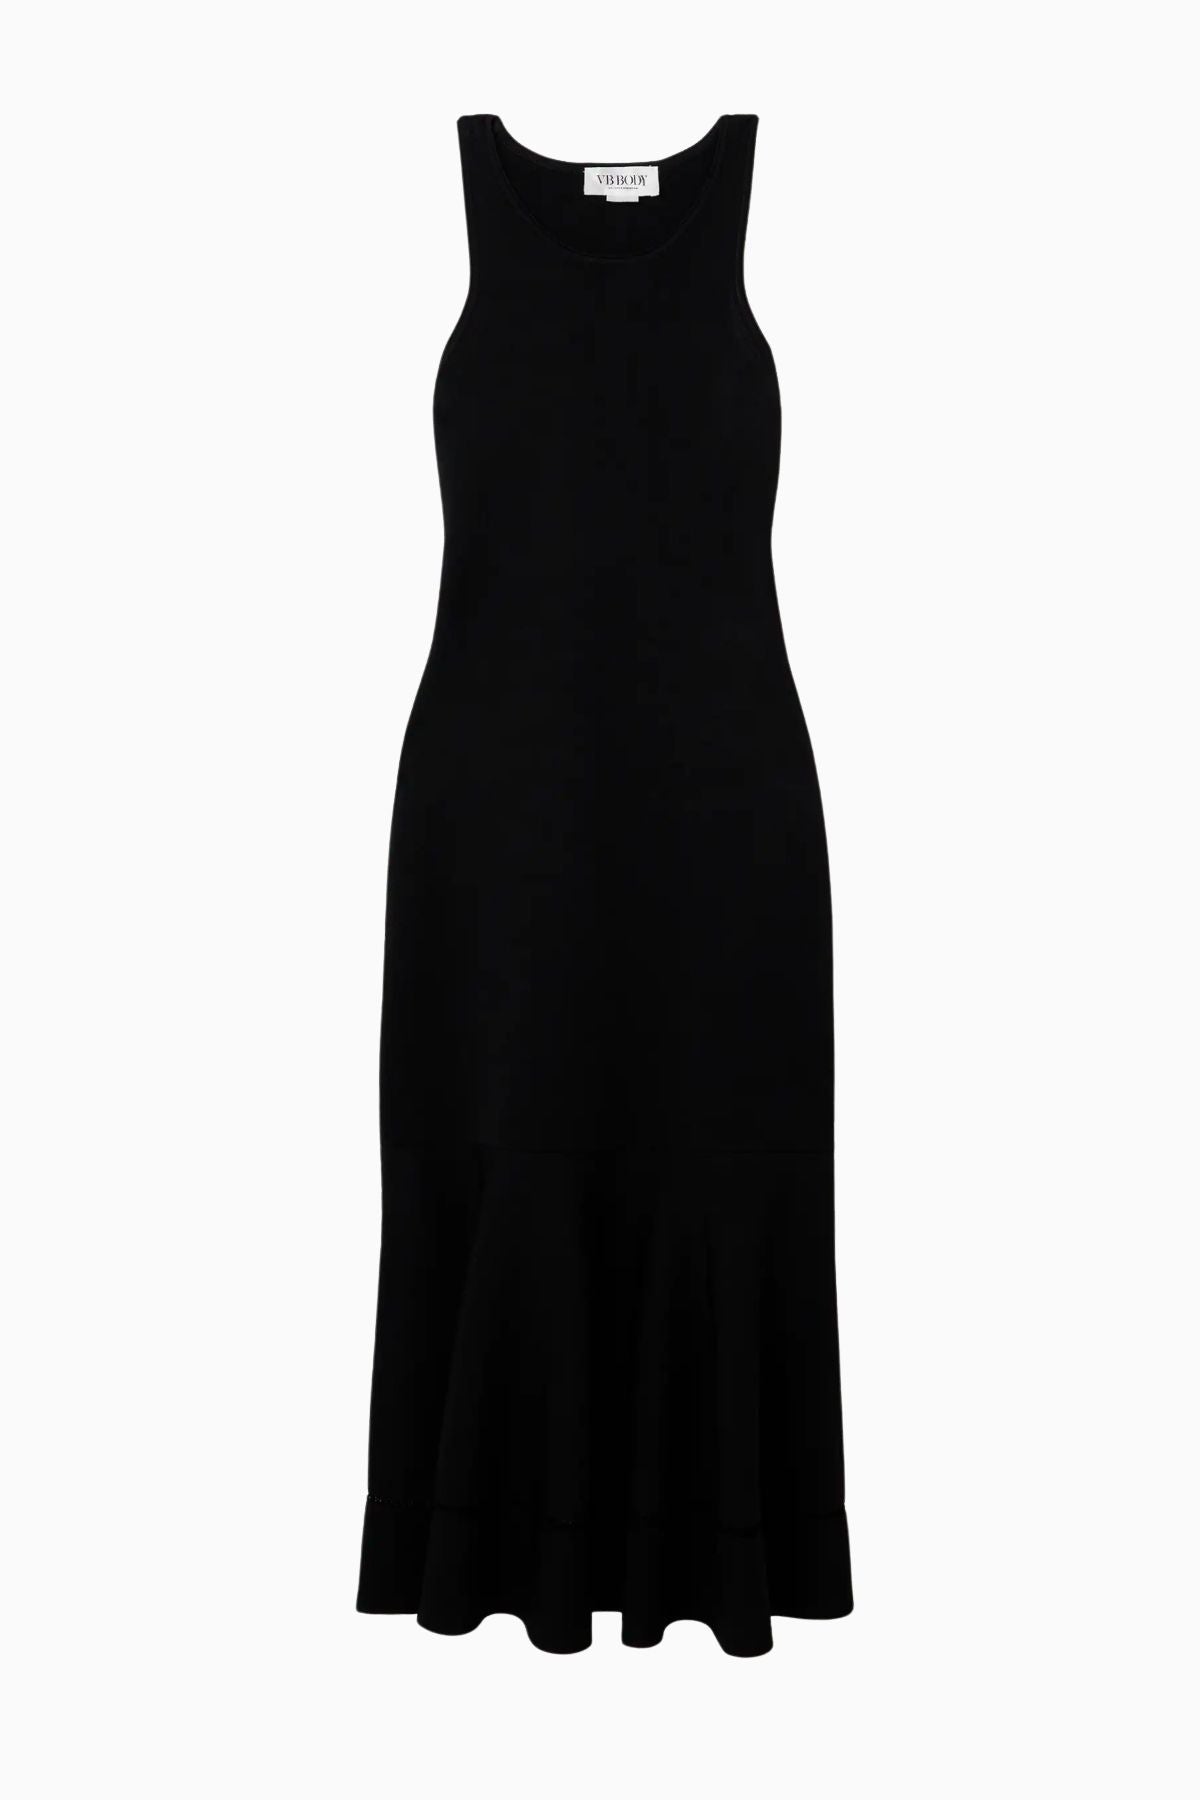 Victoria Beckham Fit & Flare Dress - Black